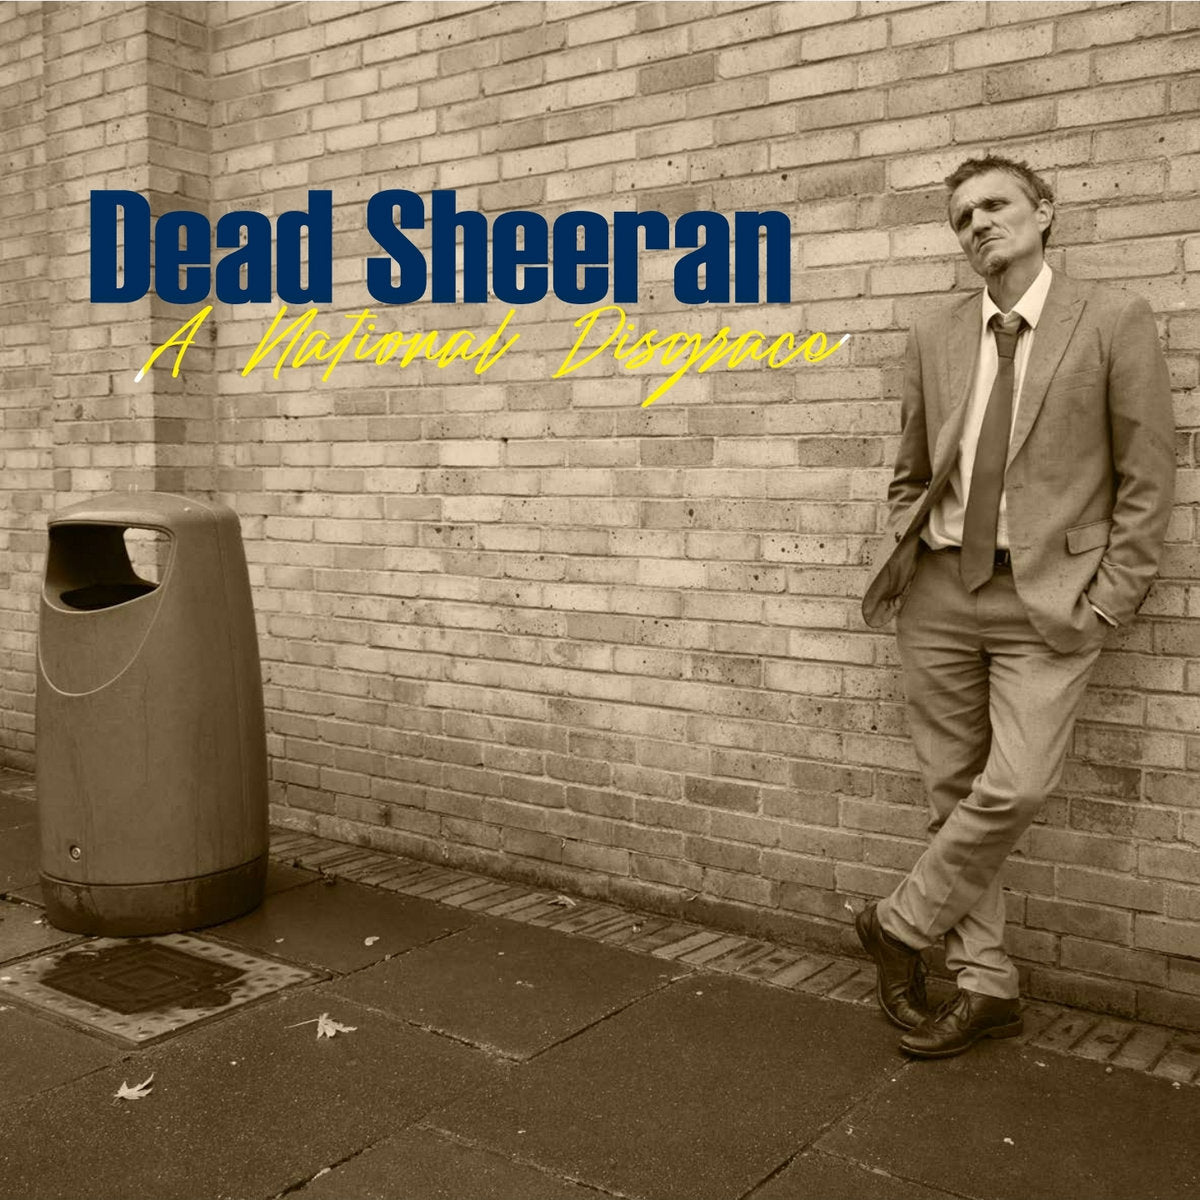 Arcade Sound - Dead Sheeran - National Disgrace - LP image